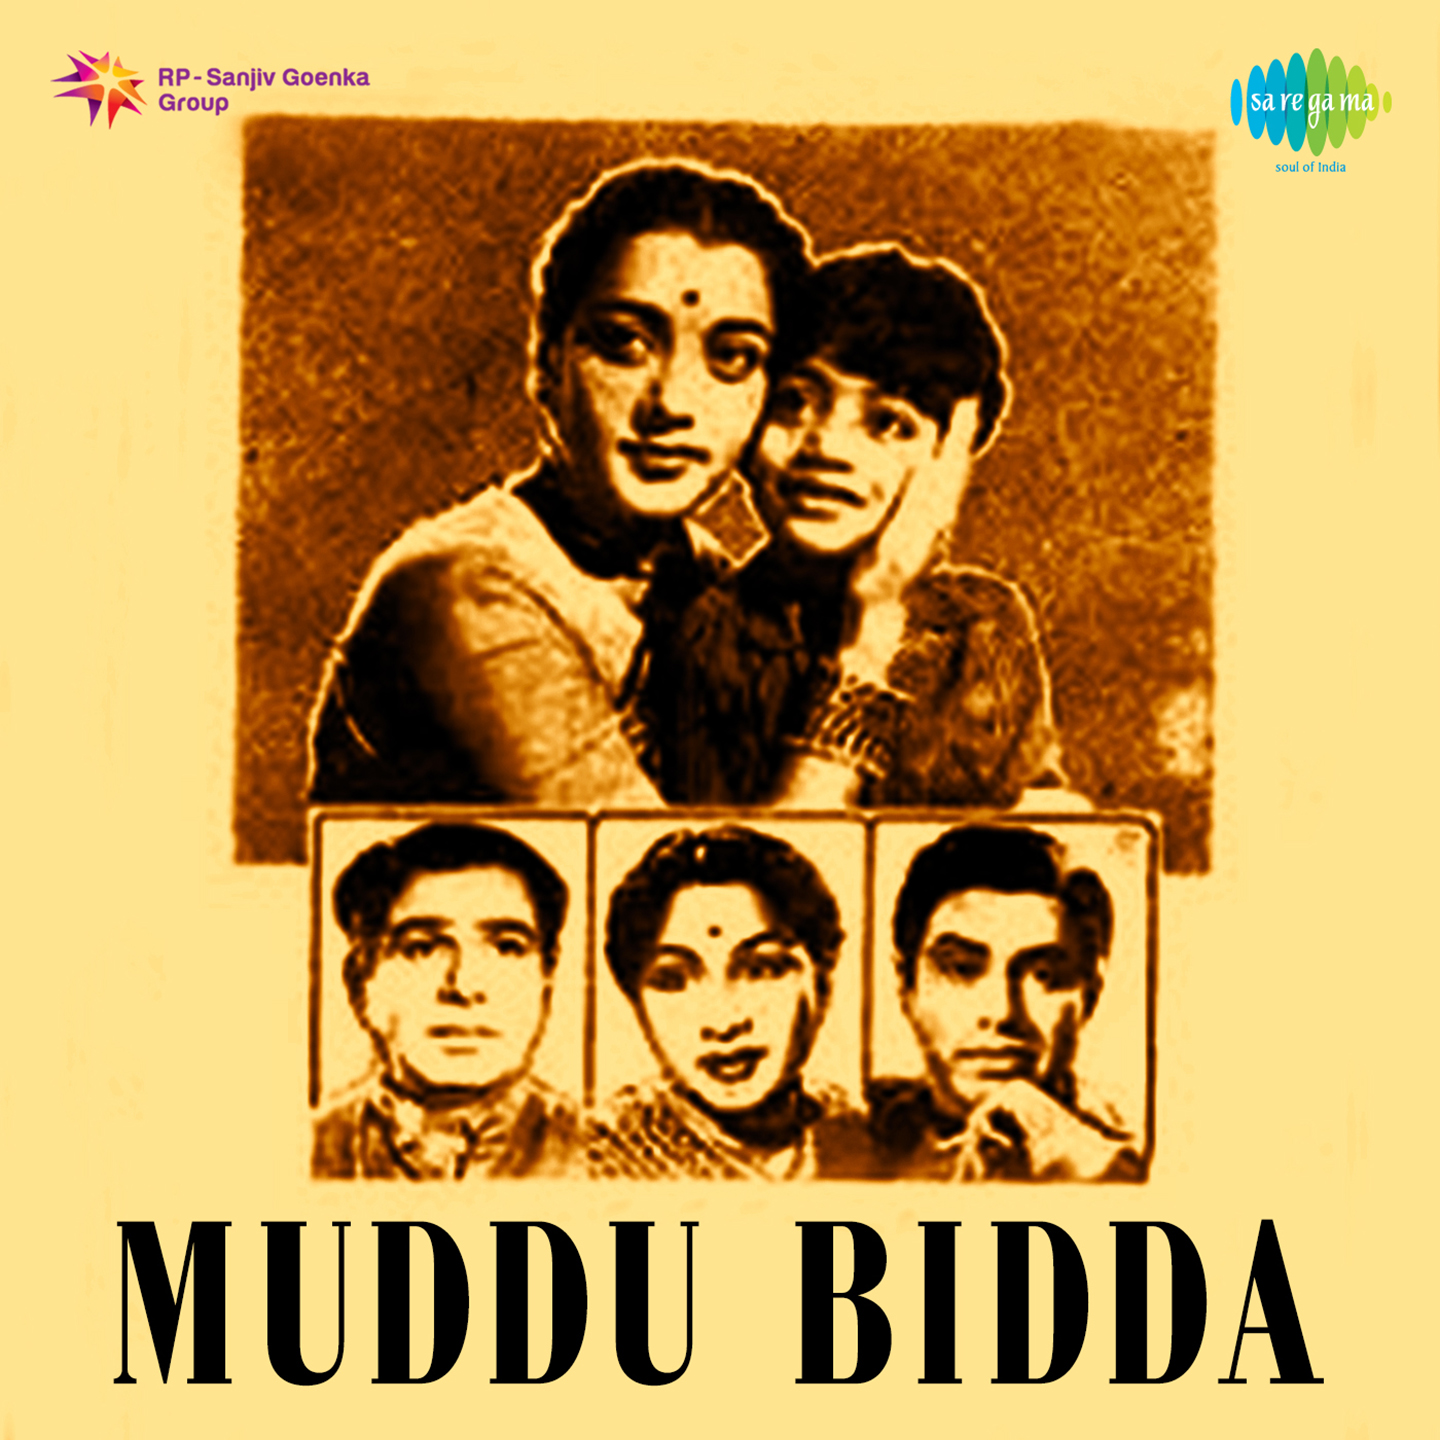 Muddu Bidda